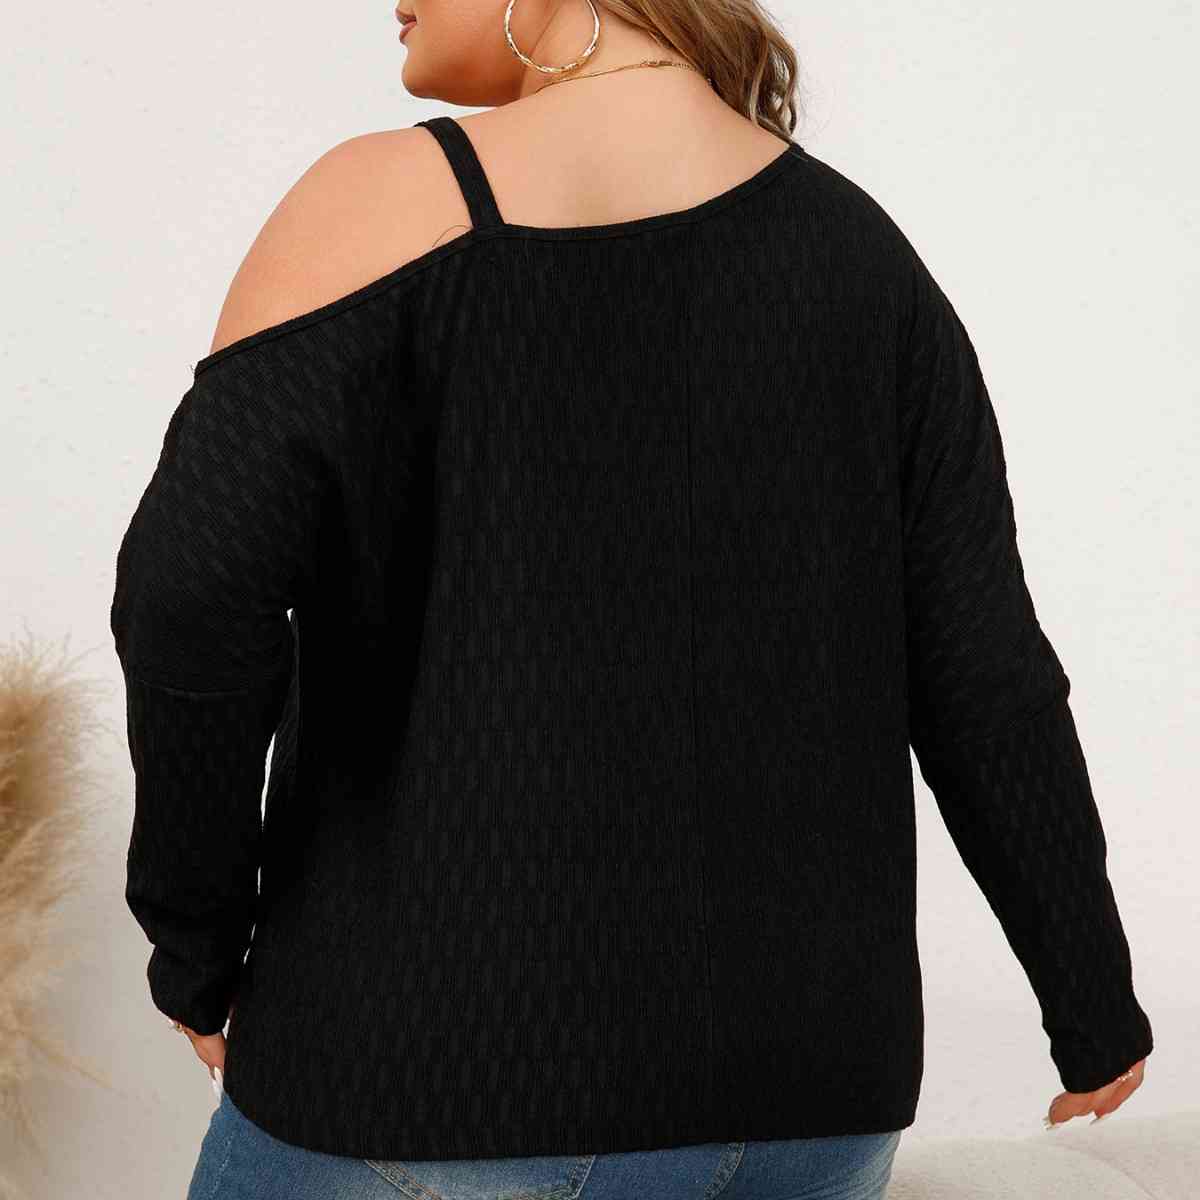 Plus Size One-Shoulder Asymmetrical Blouse - Just Enuff Sexy